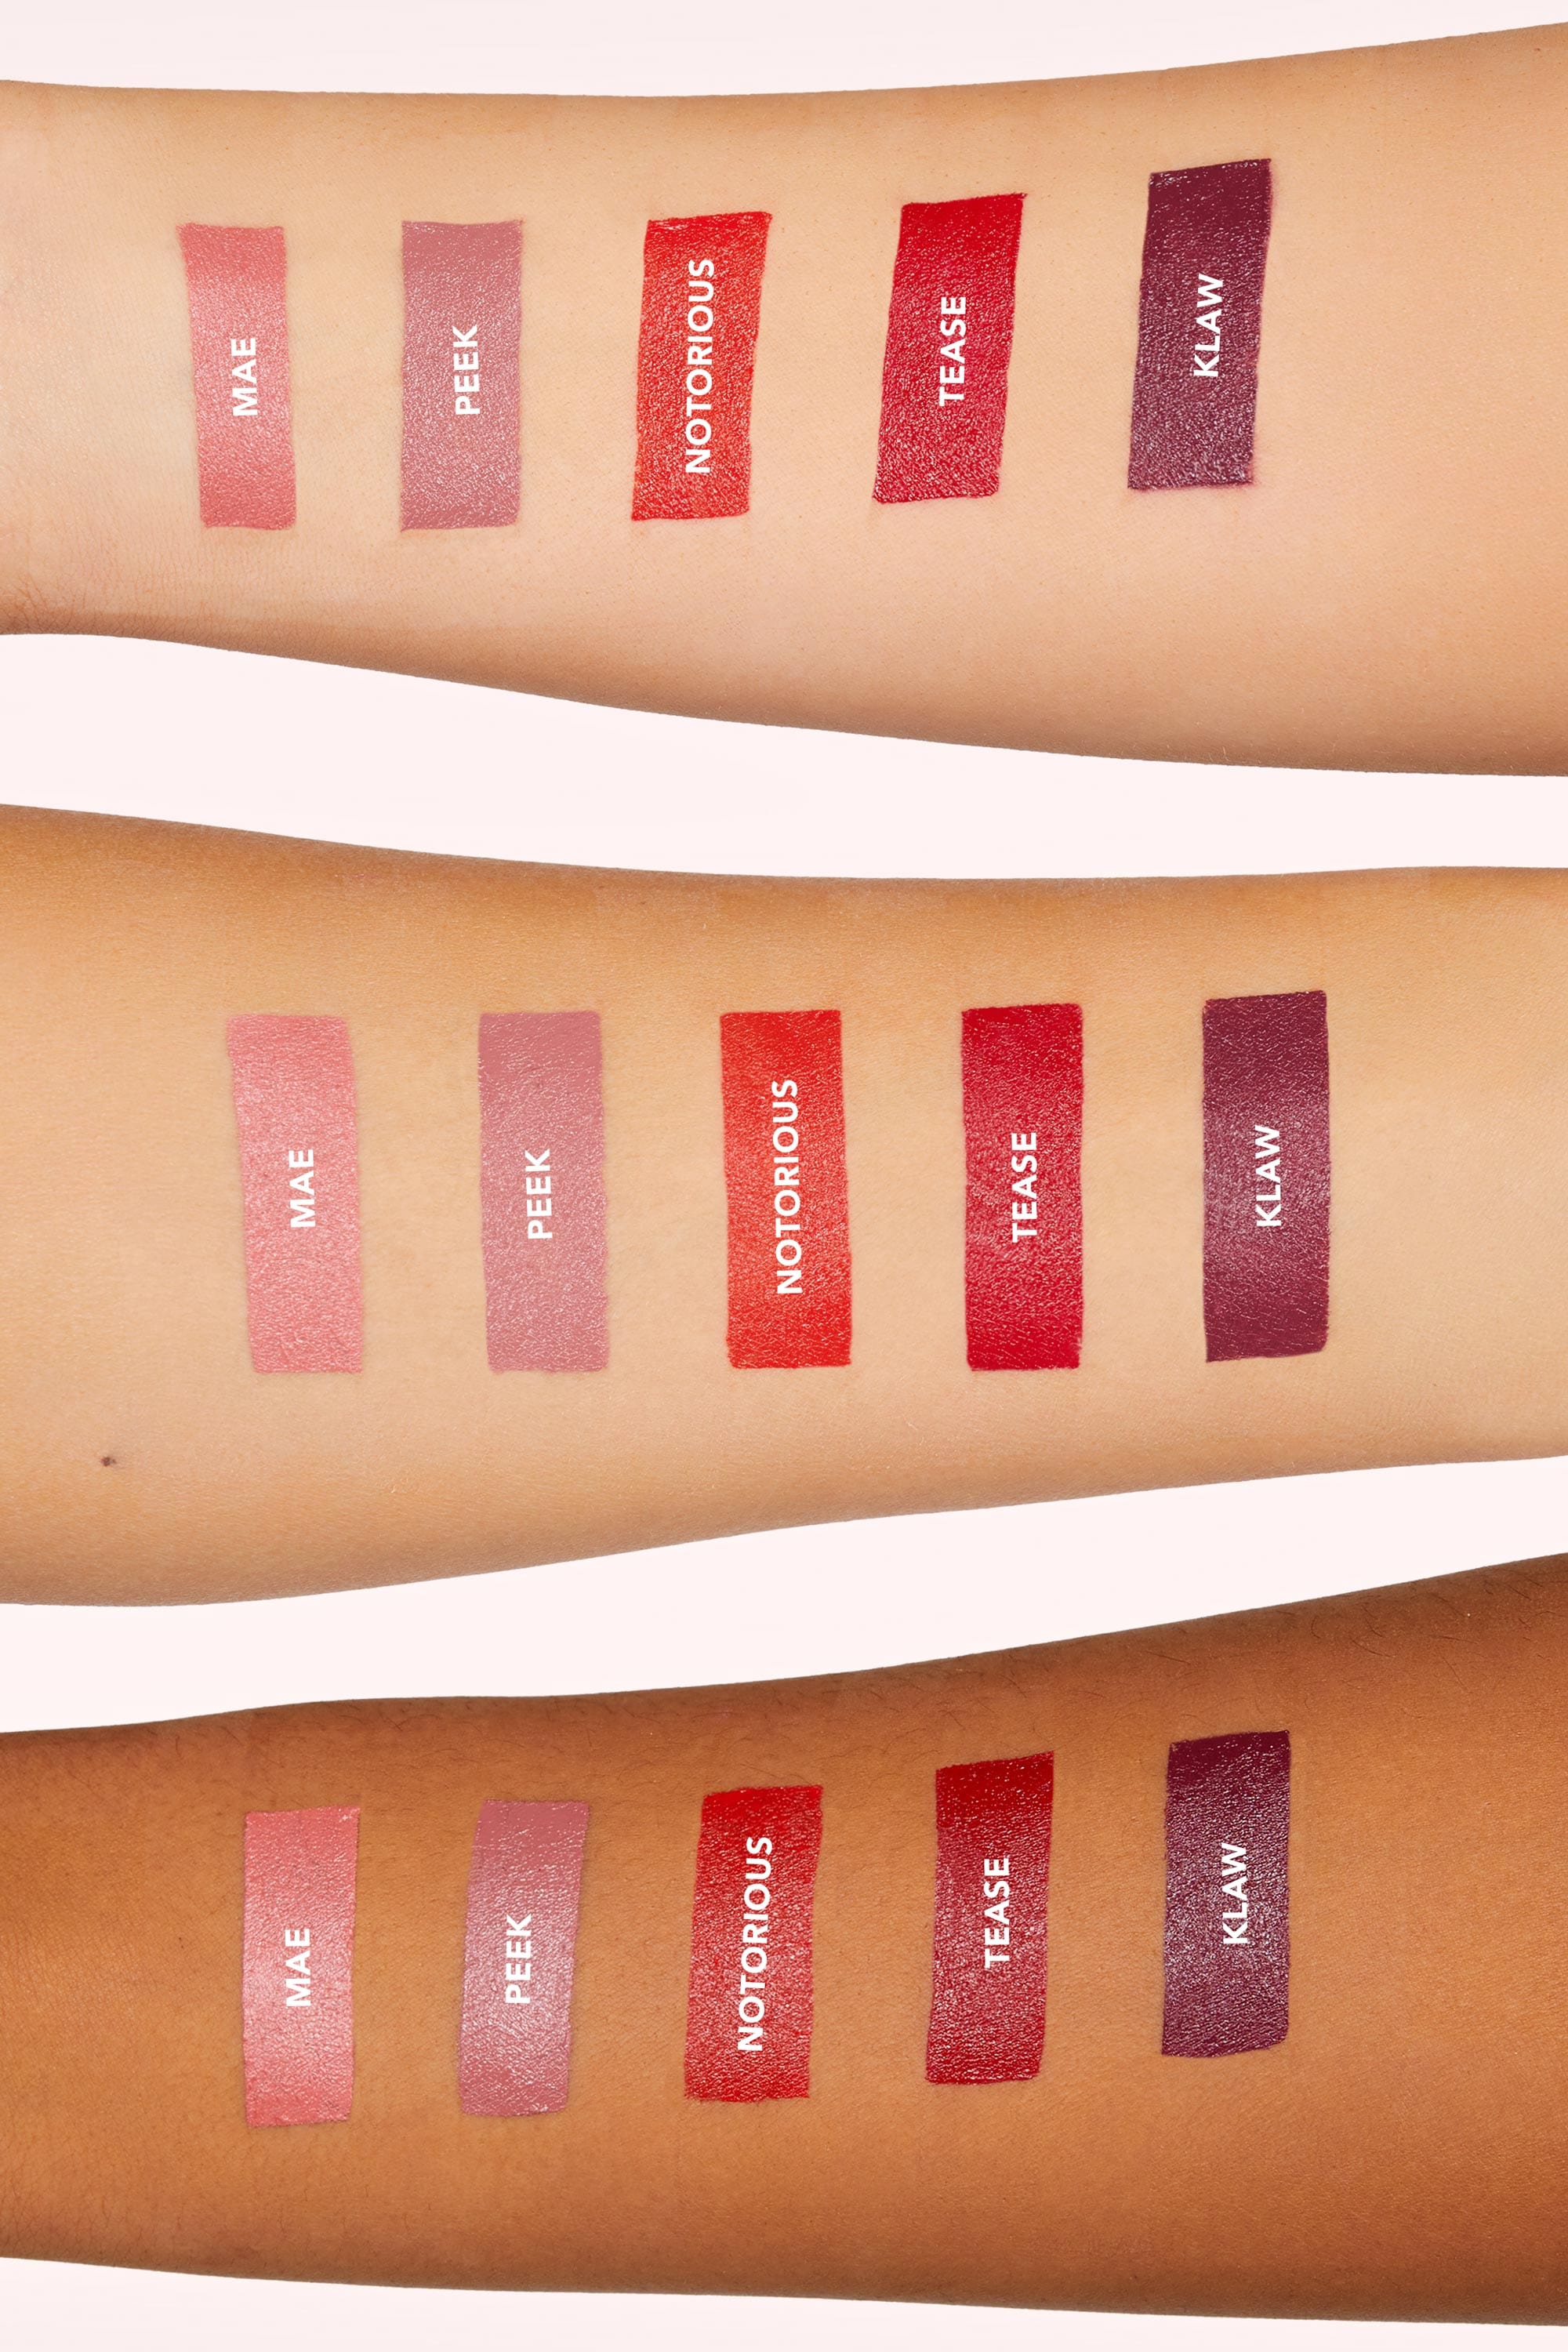 Cherry Red Tease Moisturising High Pigment Satin Lipstick